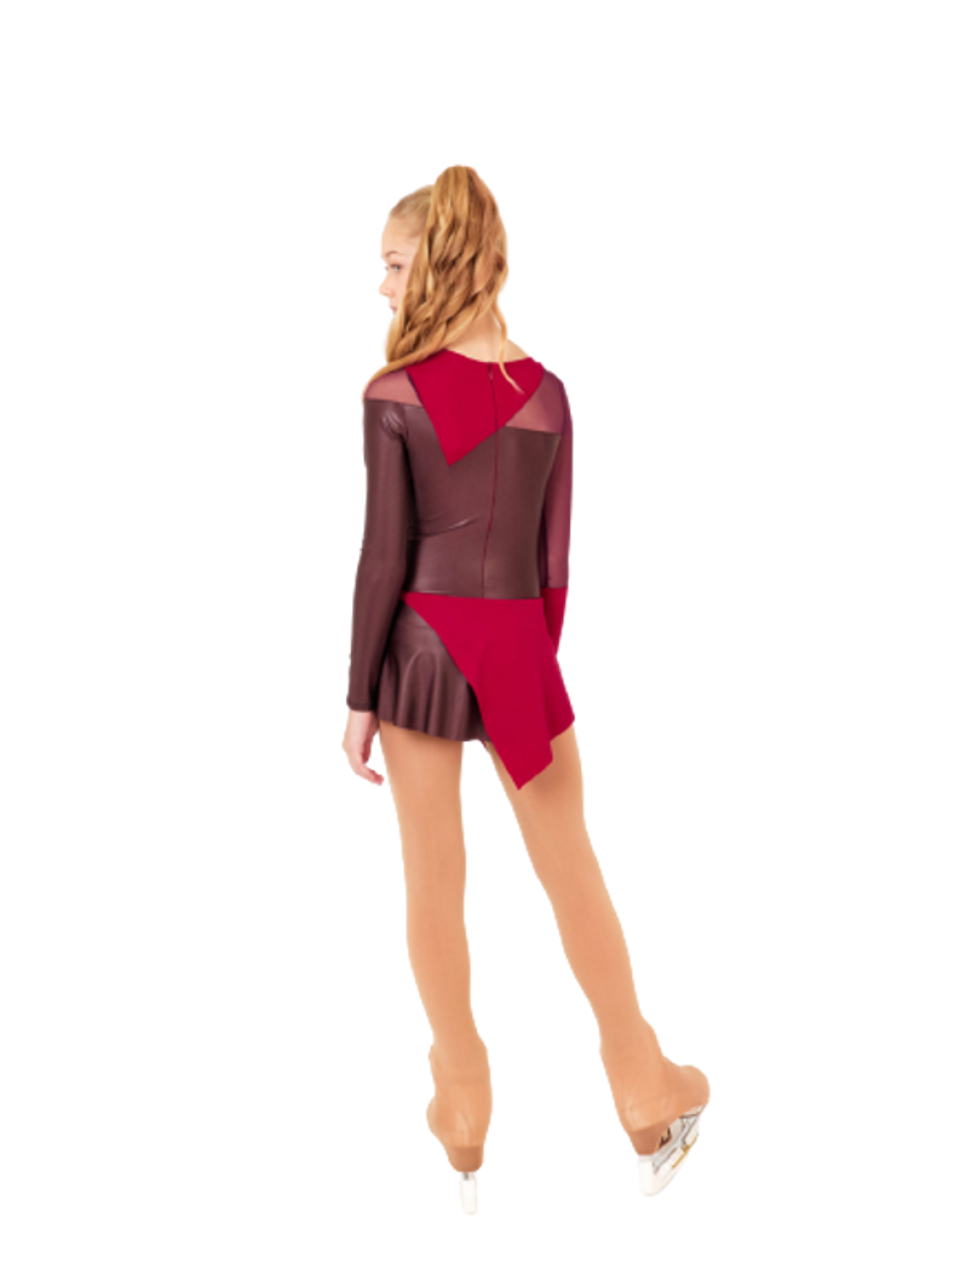 IceDress Figure Skating Dress - Thermal - Electra (Marsala)